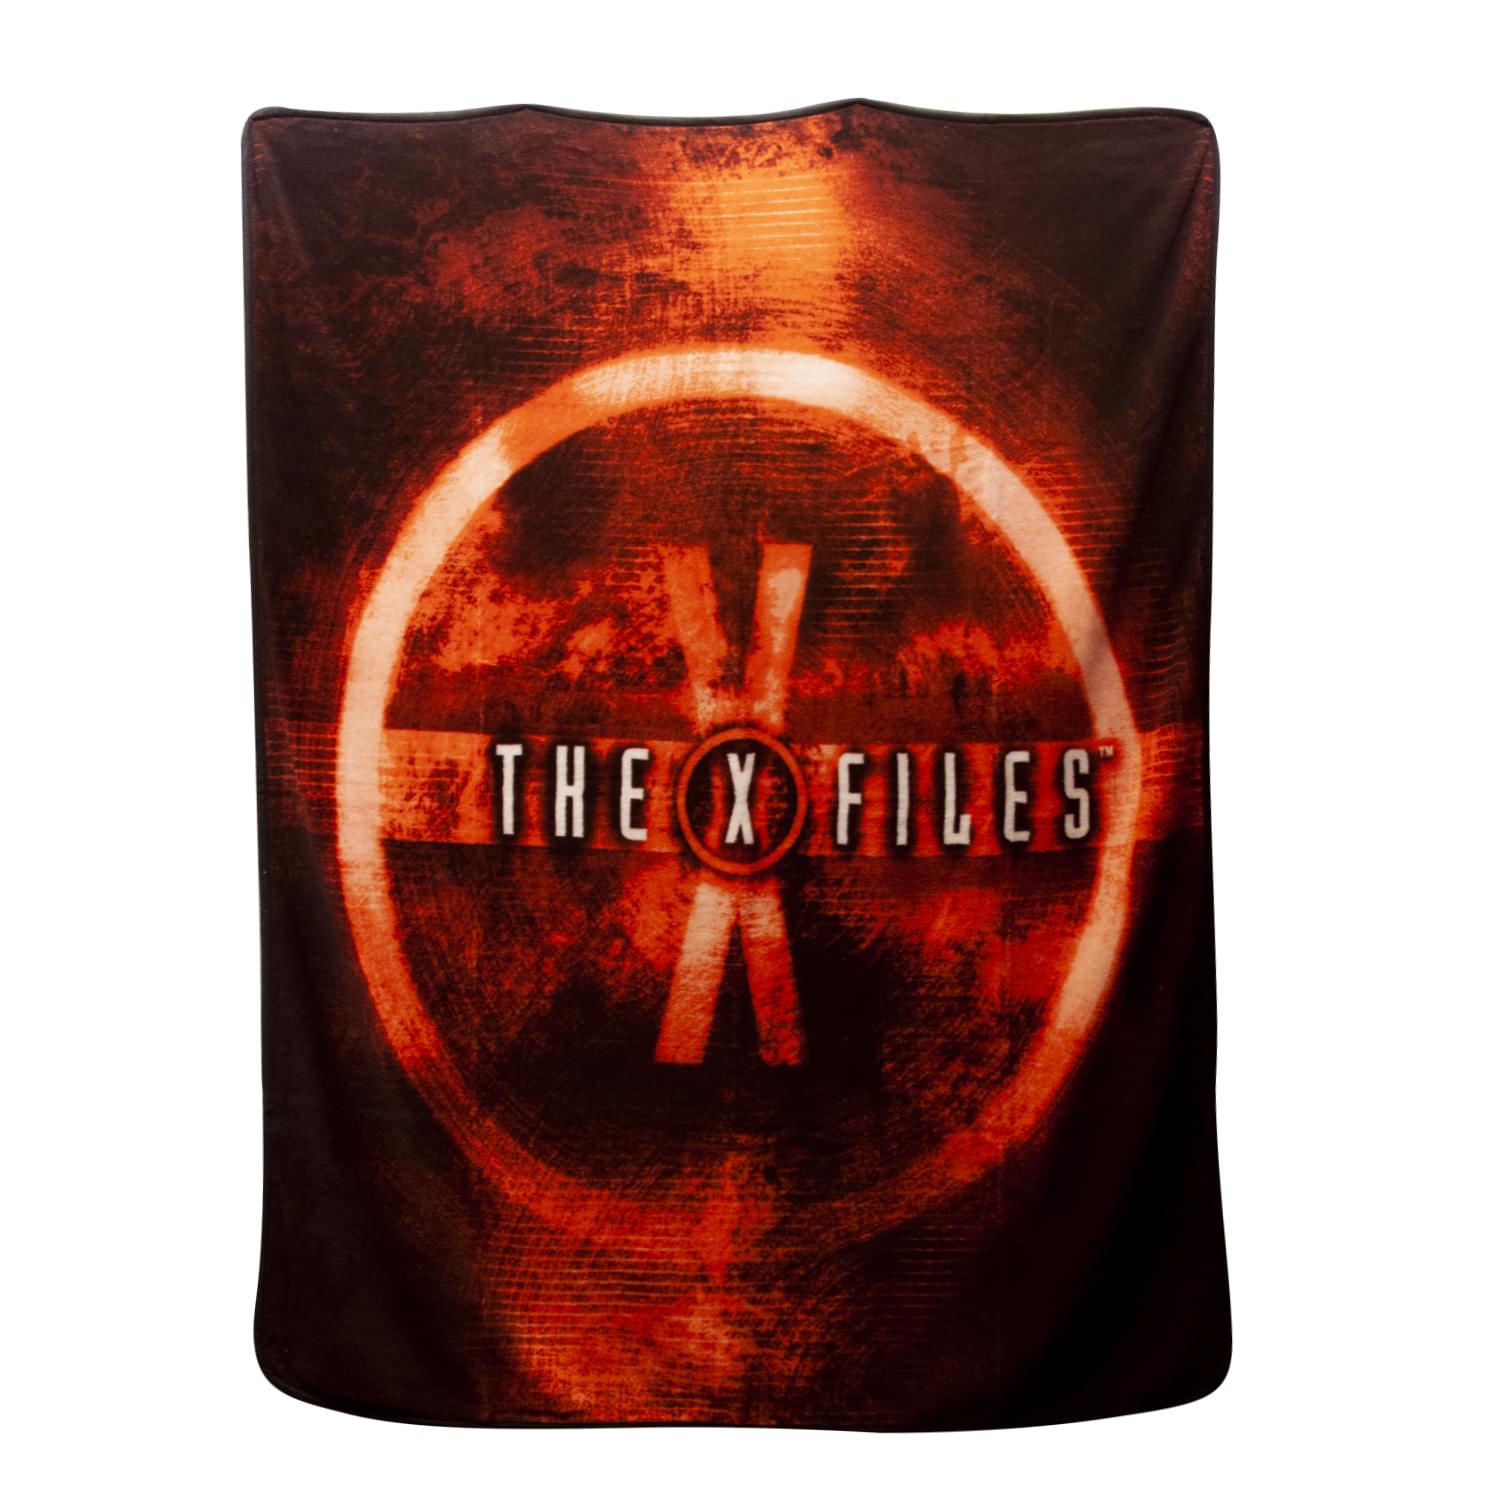 X Files Merchandise | X-Files Logo Lightweight Fleece Blanket | 50 x 60 Inches